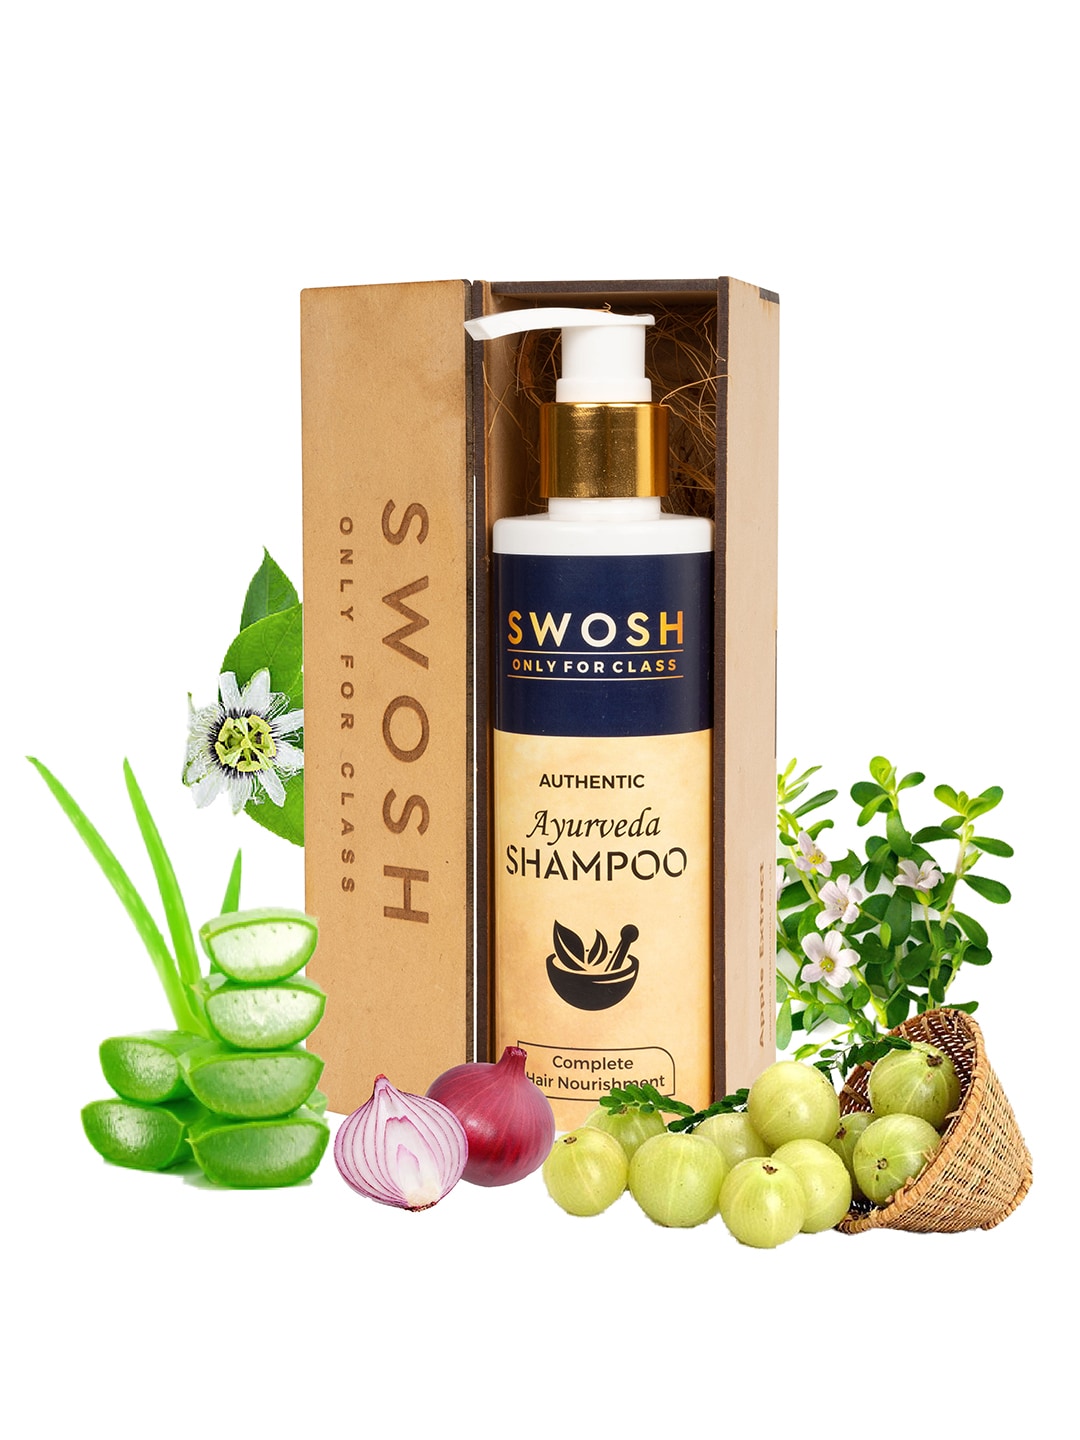 SWOSH Ayurvedic Shampoo with Amla & Aloe Vera - 200 ml Price in India